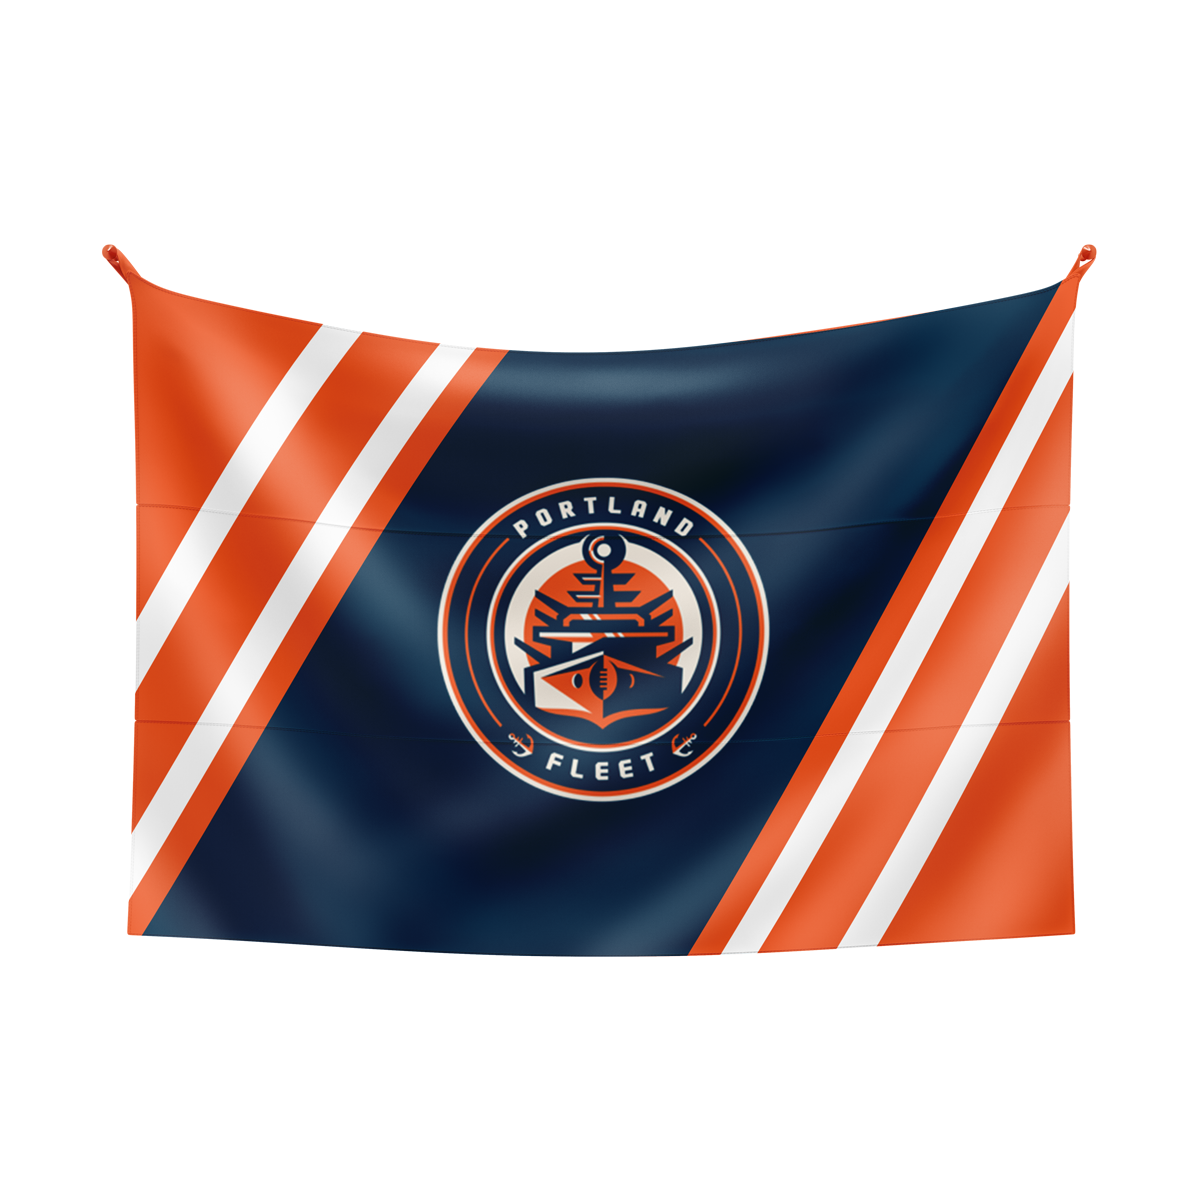 Portland Fleet Flag (1)